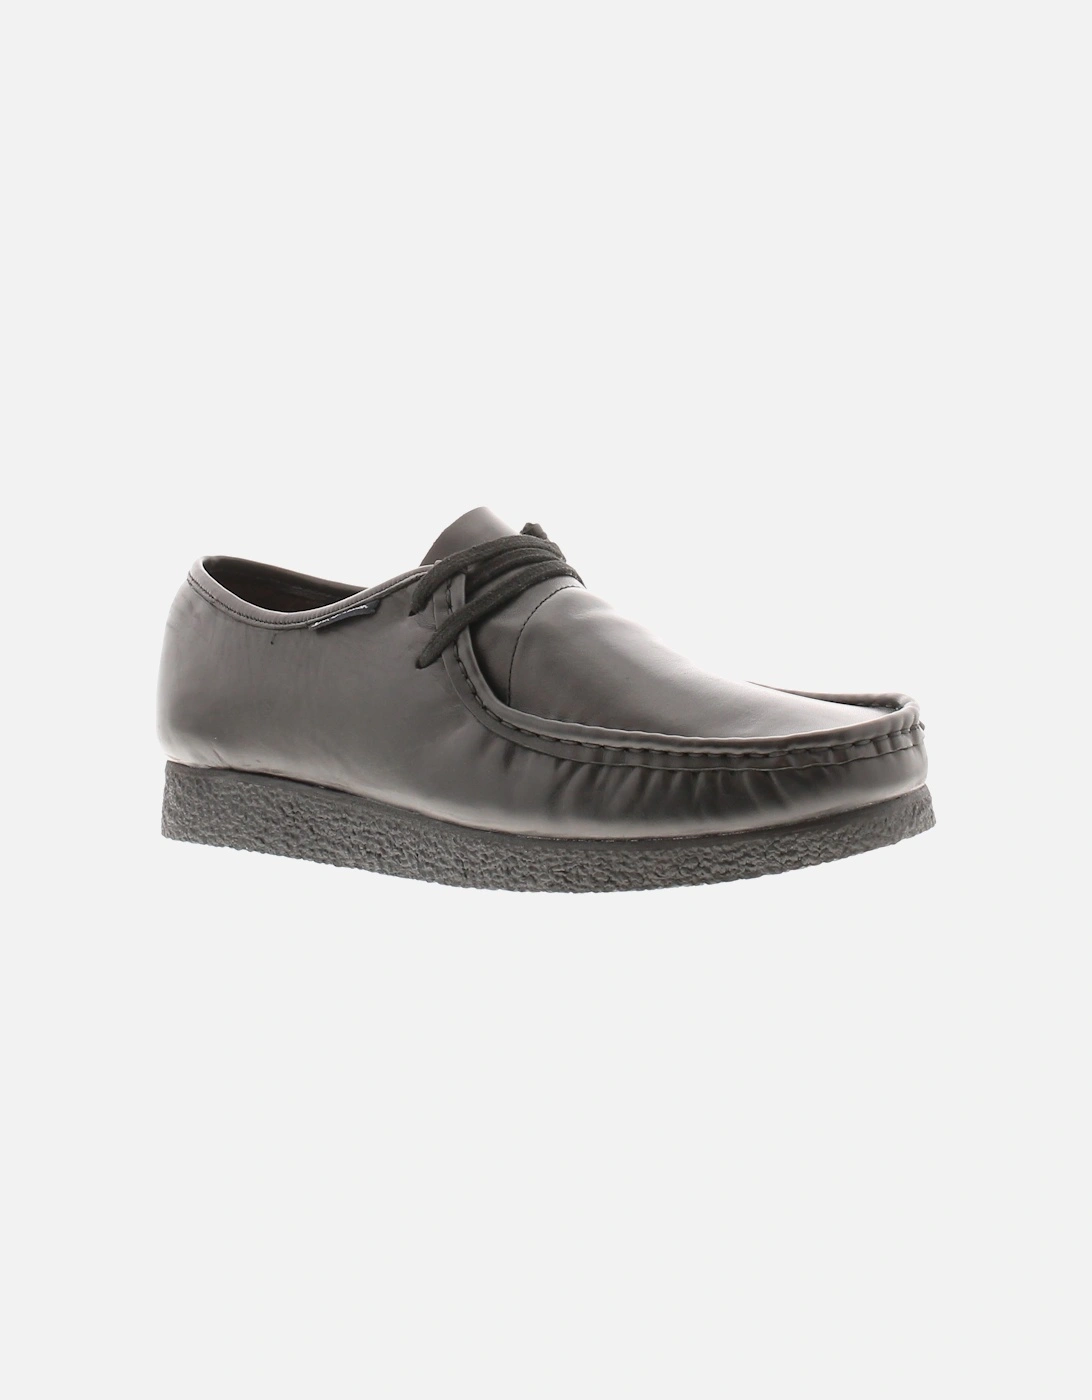 Mens Shoes Work School Glasto Leather black UK Size, 6 of 5